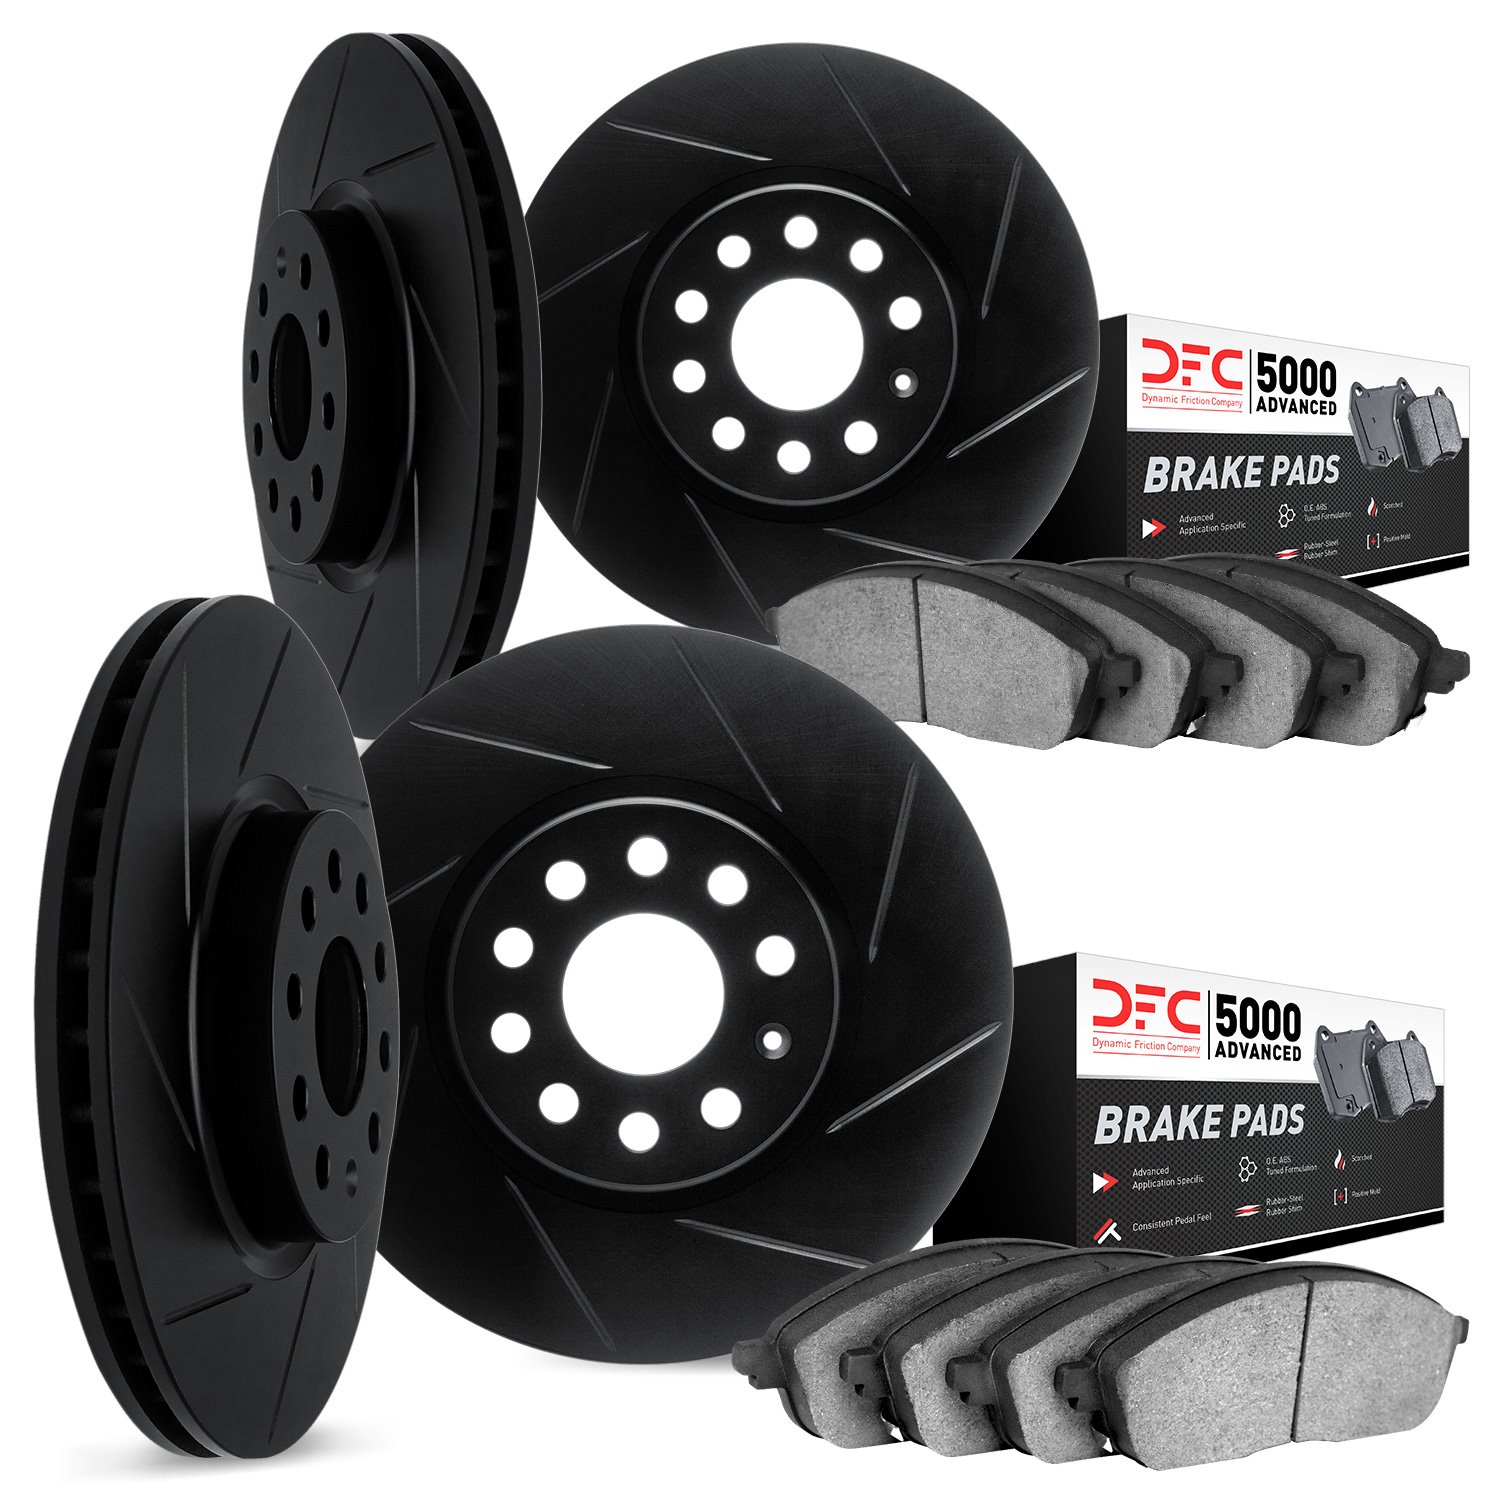 3514-67076 Slotted Brake Rotors w/5000 Advanced Brake Pads Kit & Hardware [Black], 2014-2019 Infiniti/Nissan, Position: Front an